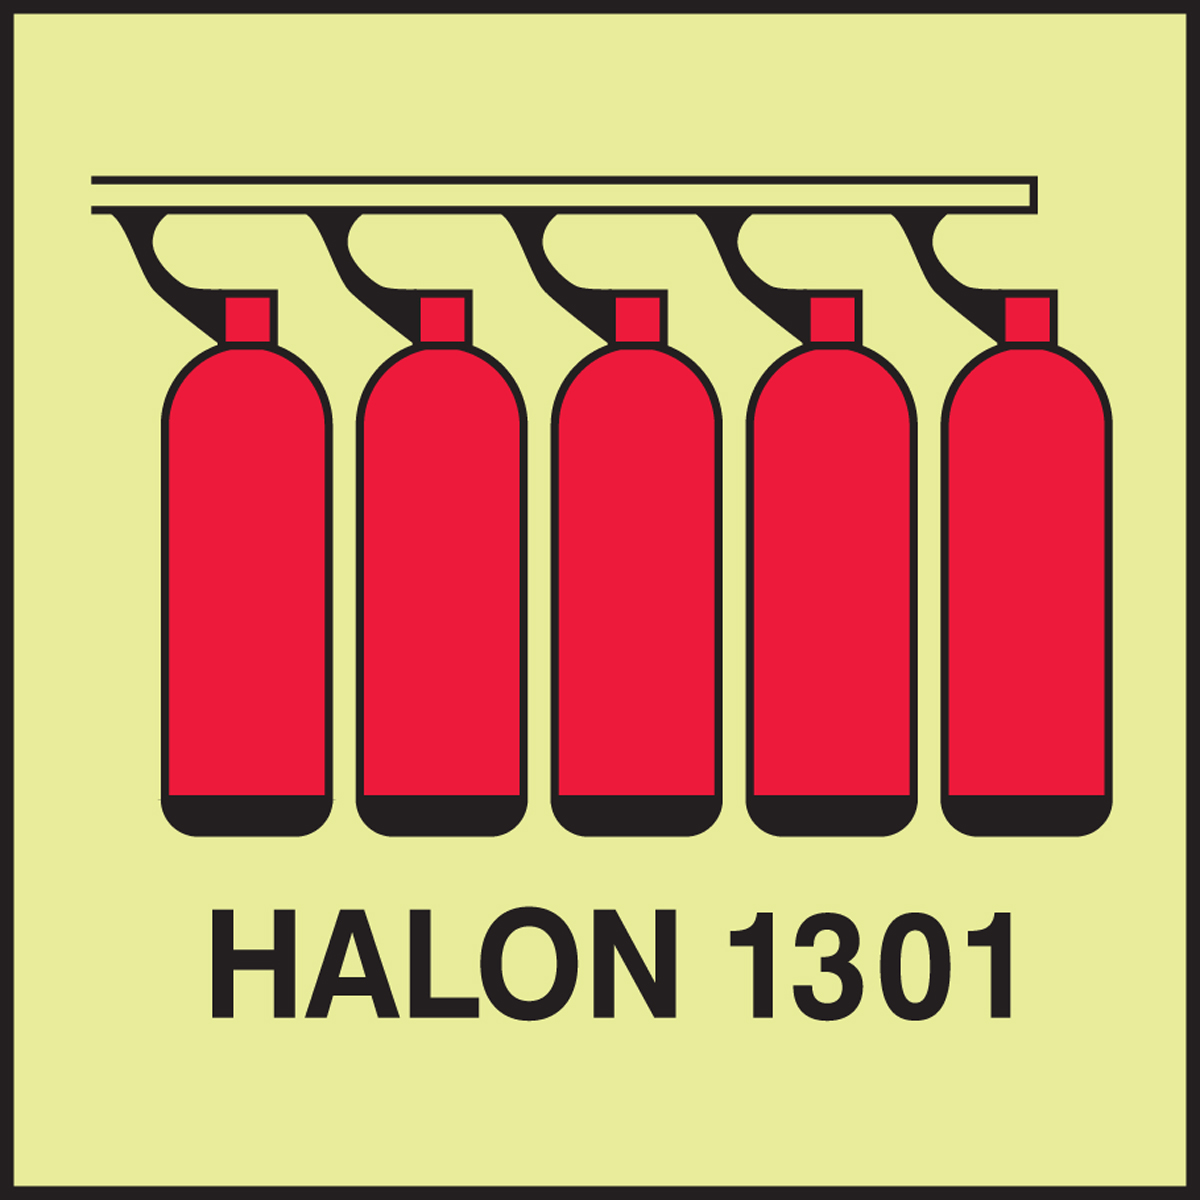 HALON 1301 BATTERY